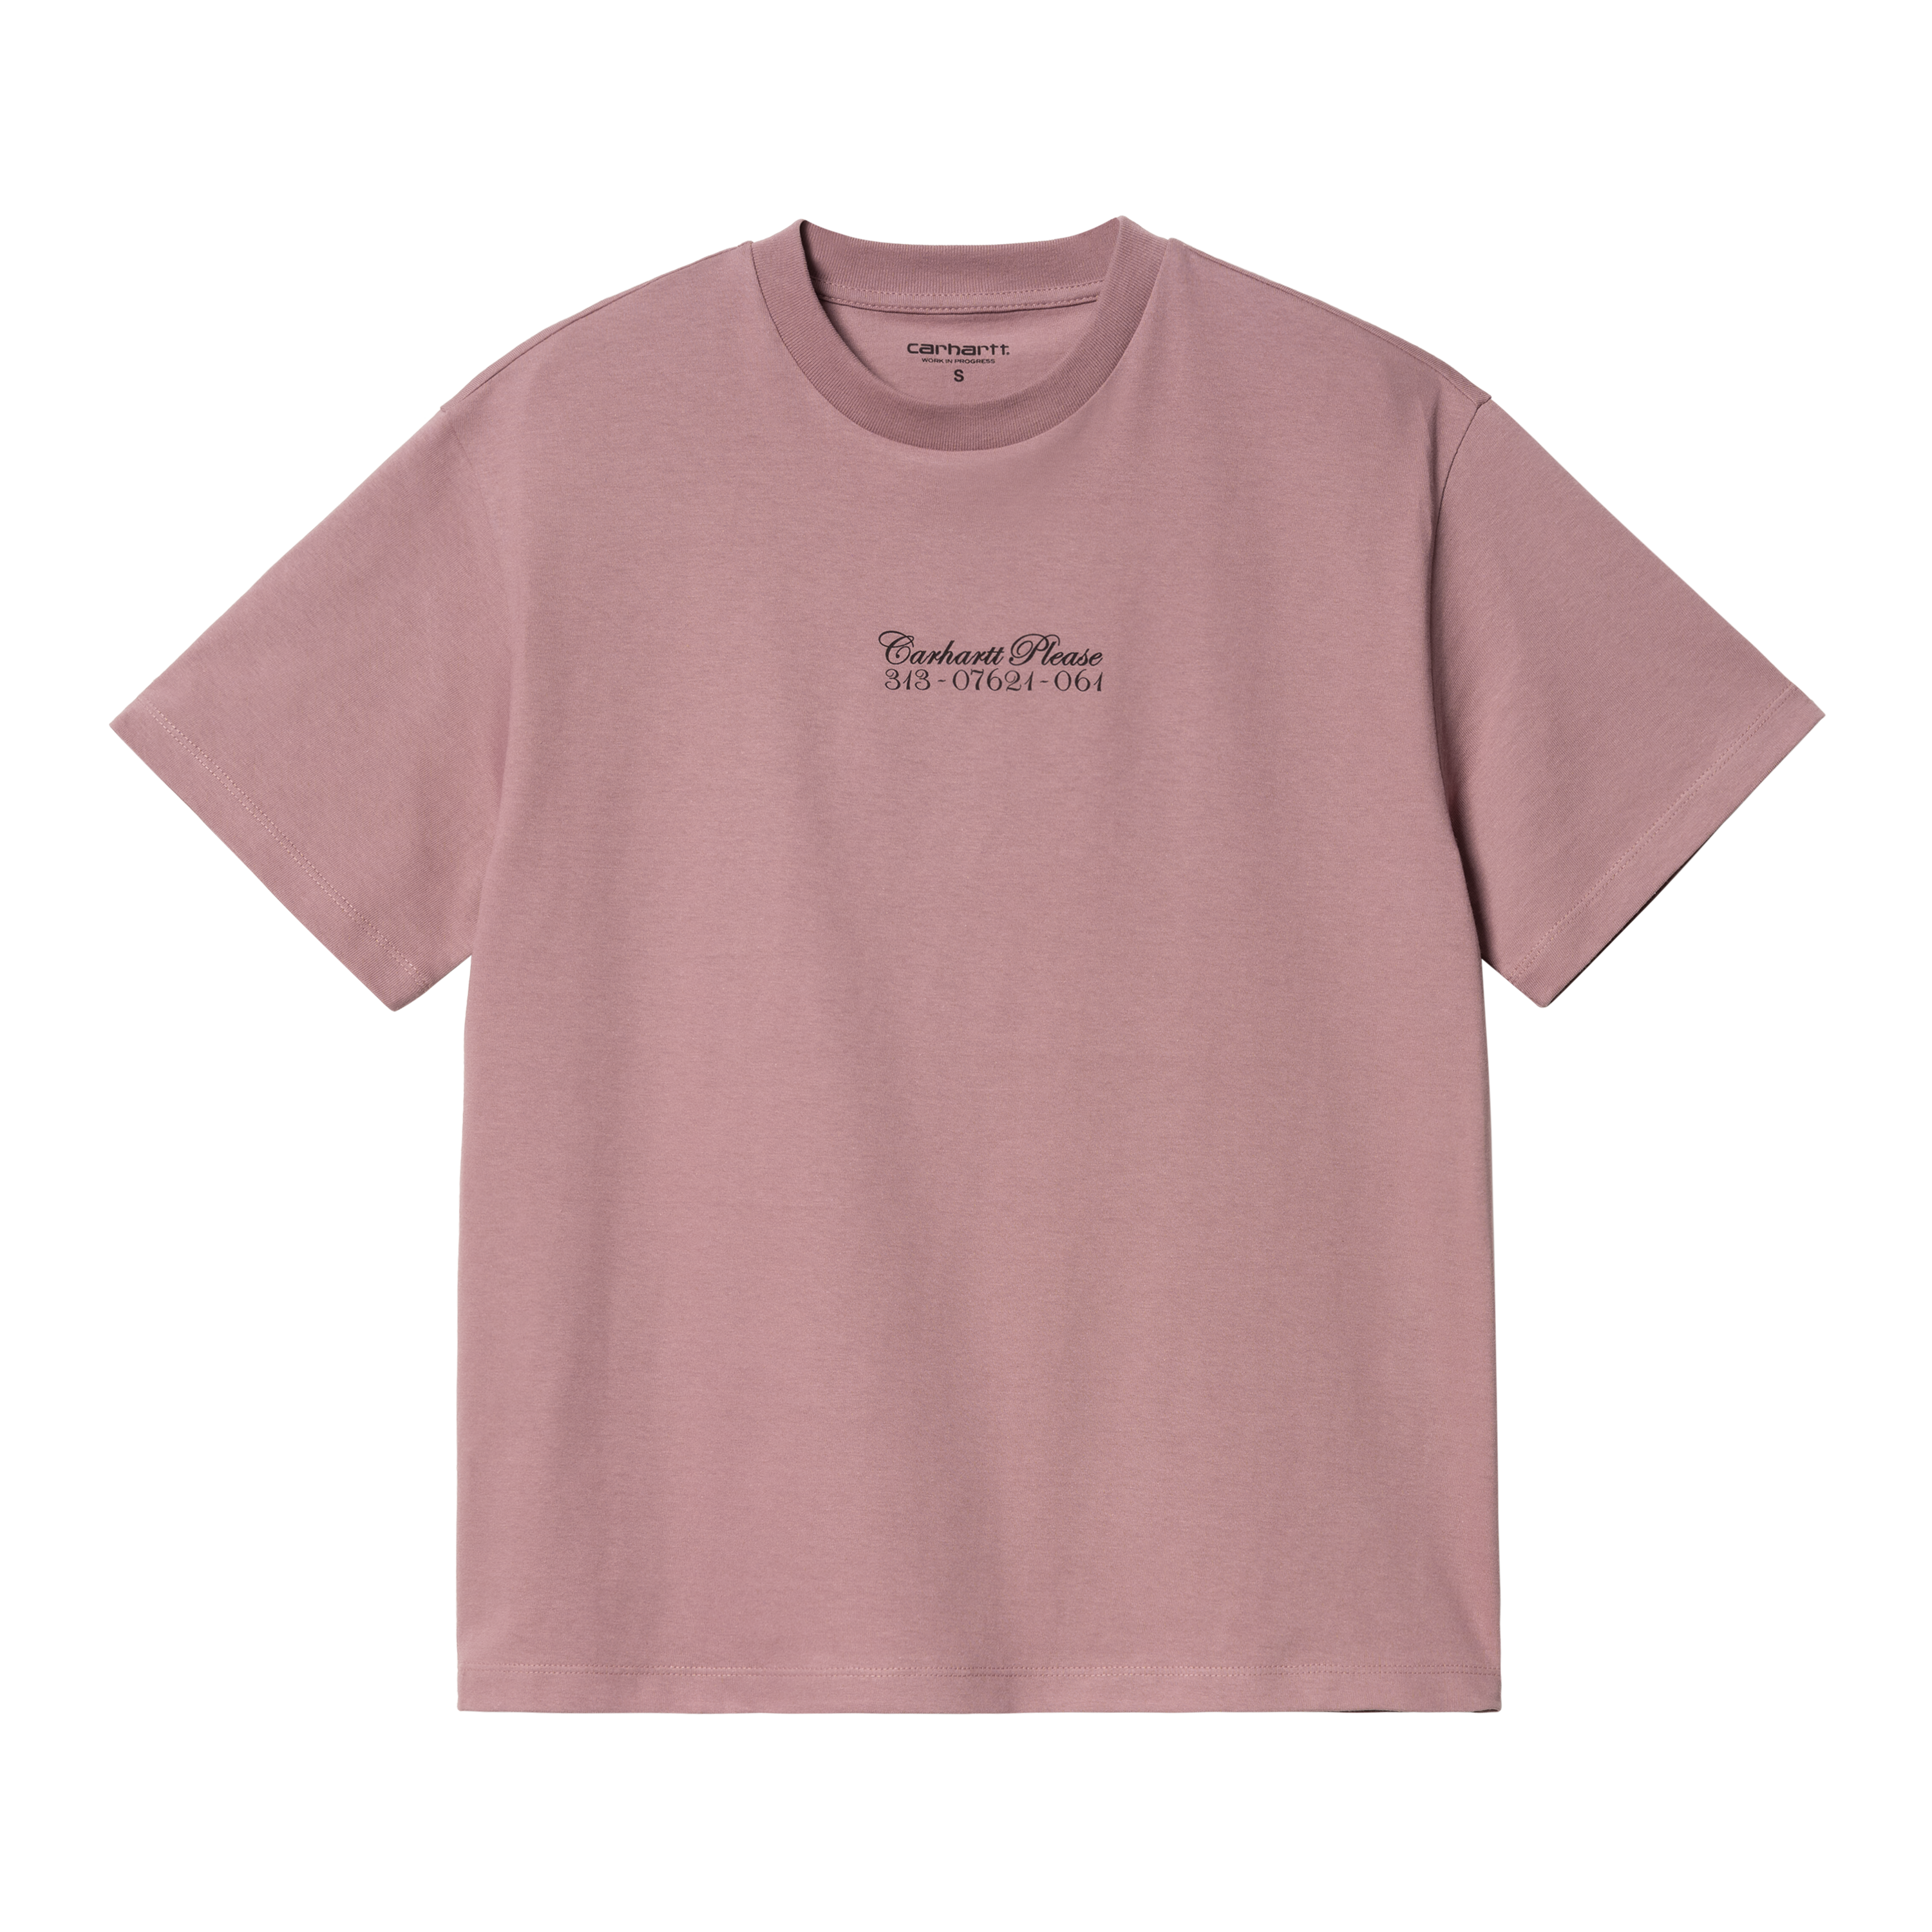 Carhartt WIP Women’s Short Sleeve Carhartt Please T-Shirt in Pink